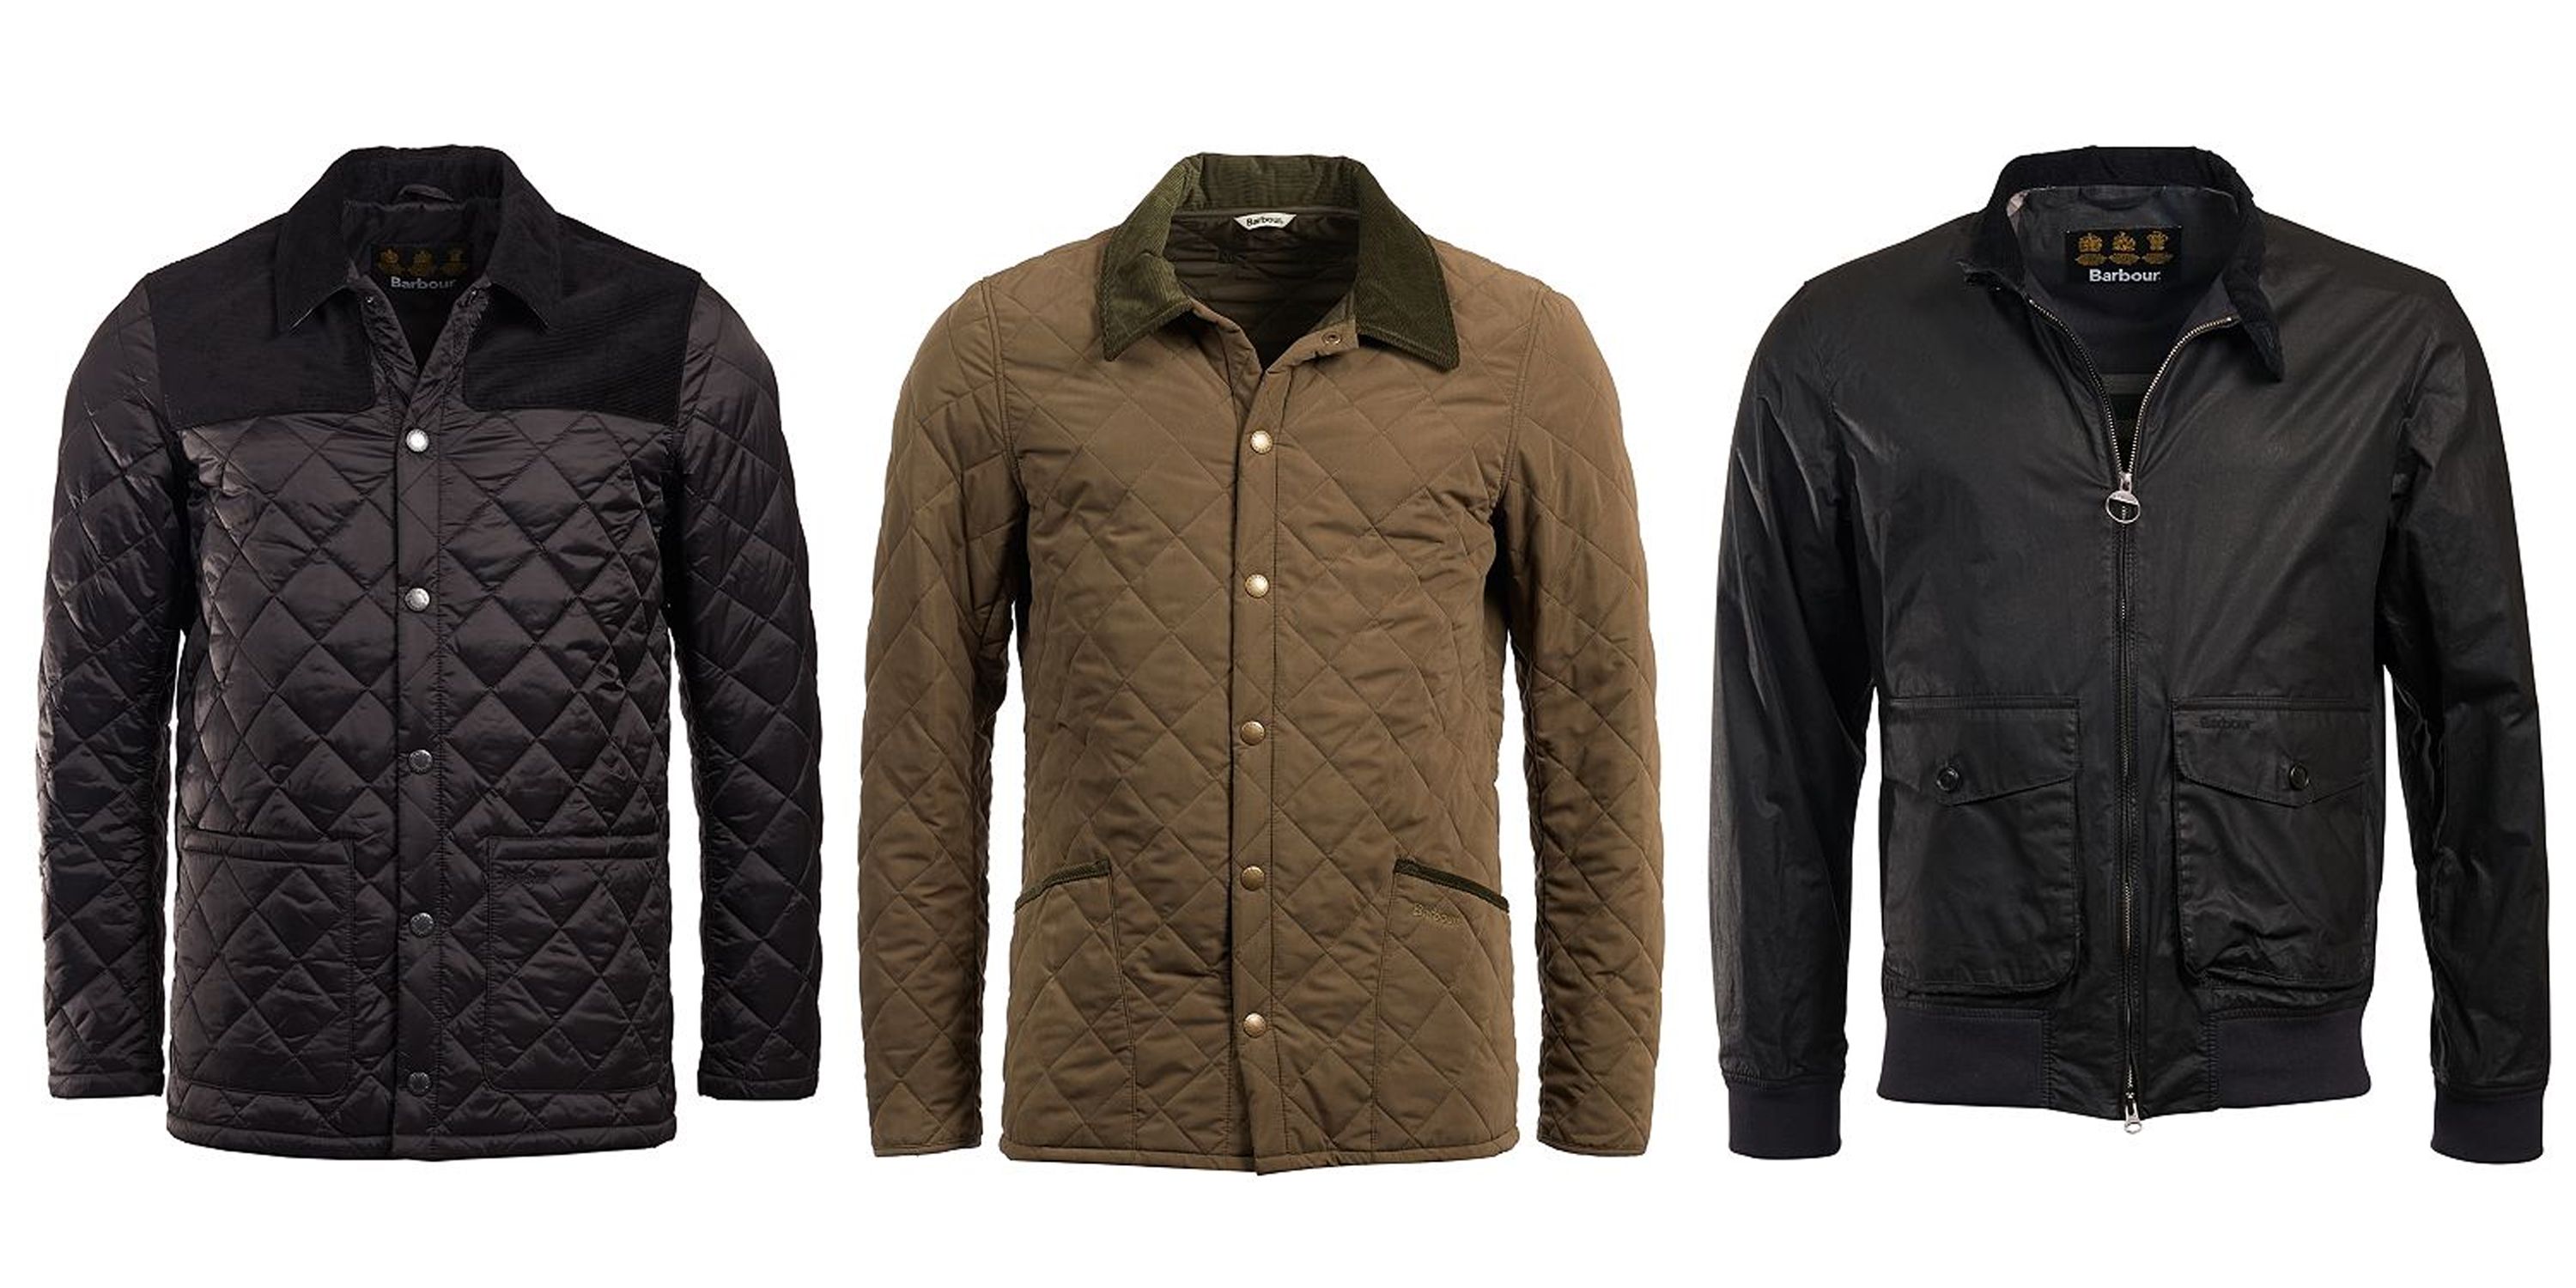 mens barbour jackets on sale Online 